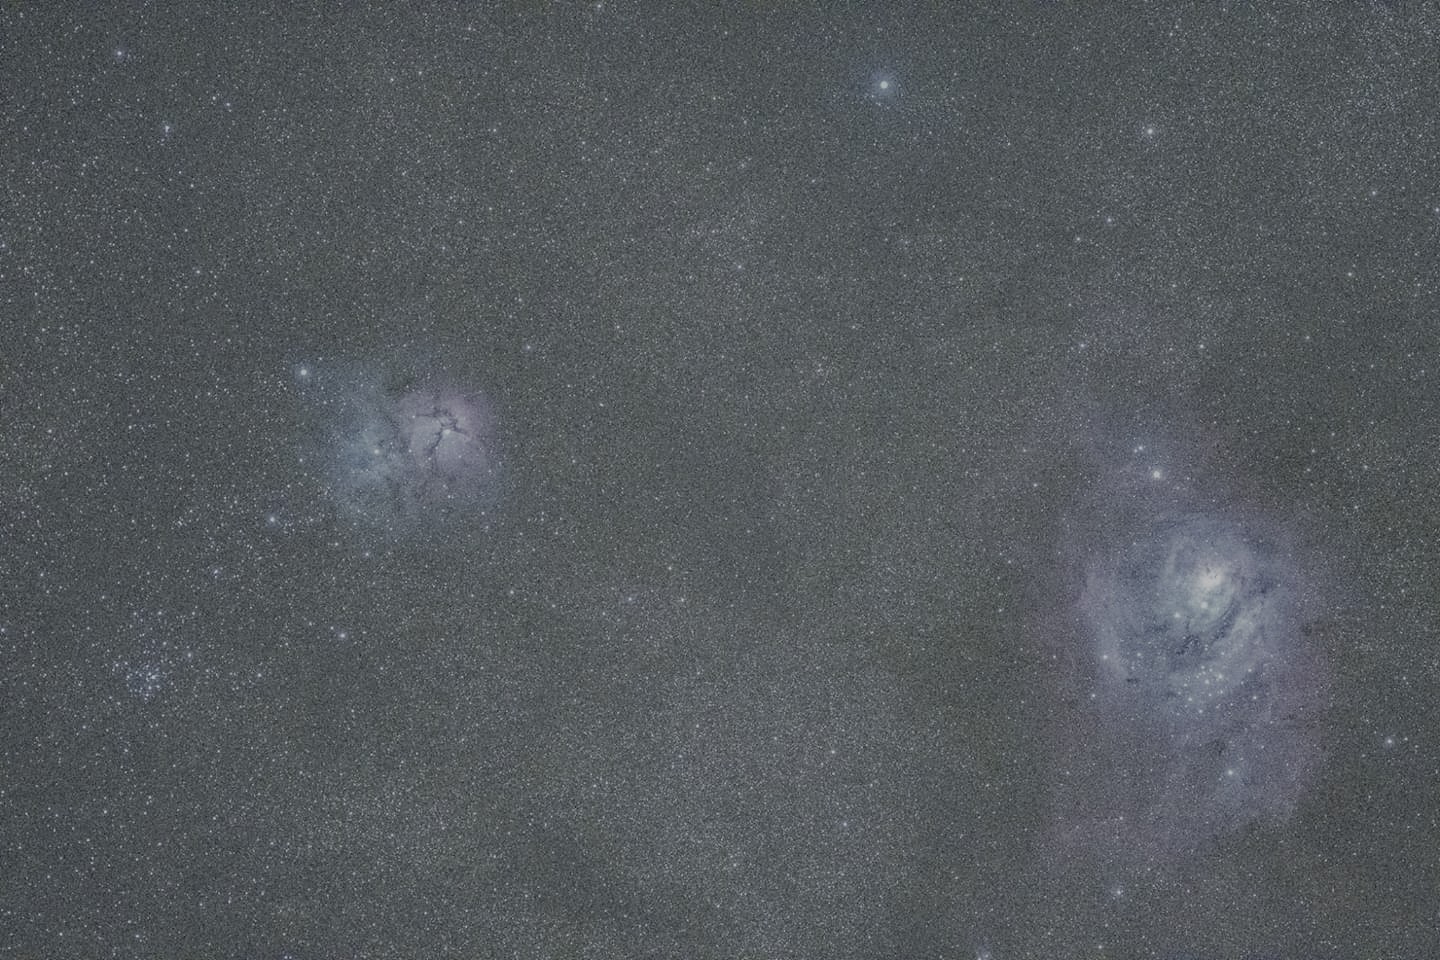 Trifid and Lagoon Nebulas